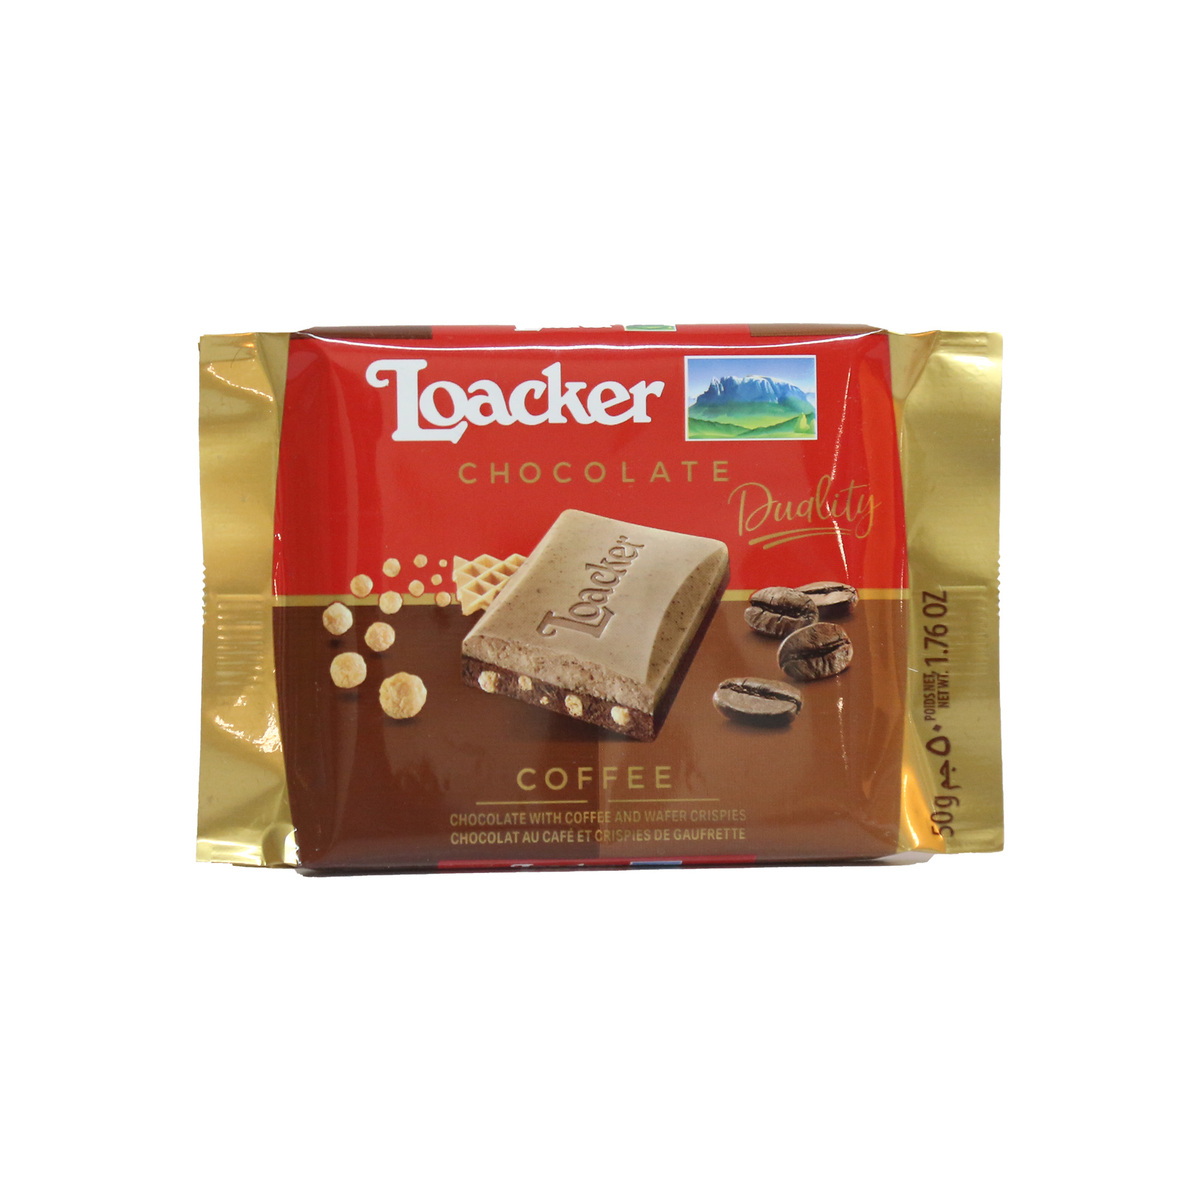 Loacker Chocolate With Coffee & Wafer Crispies 50g